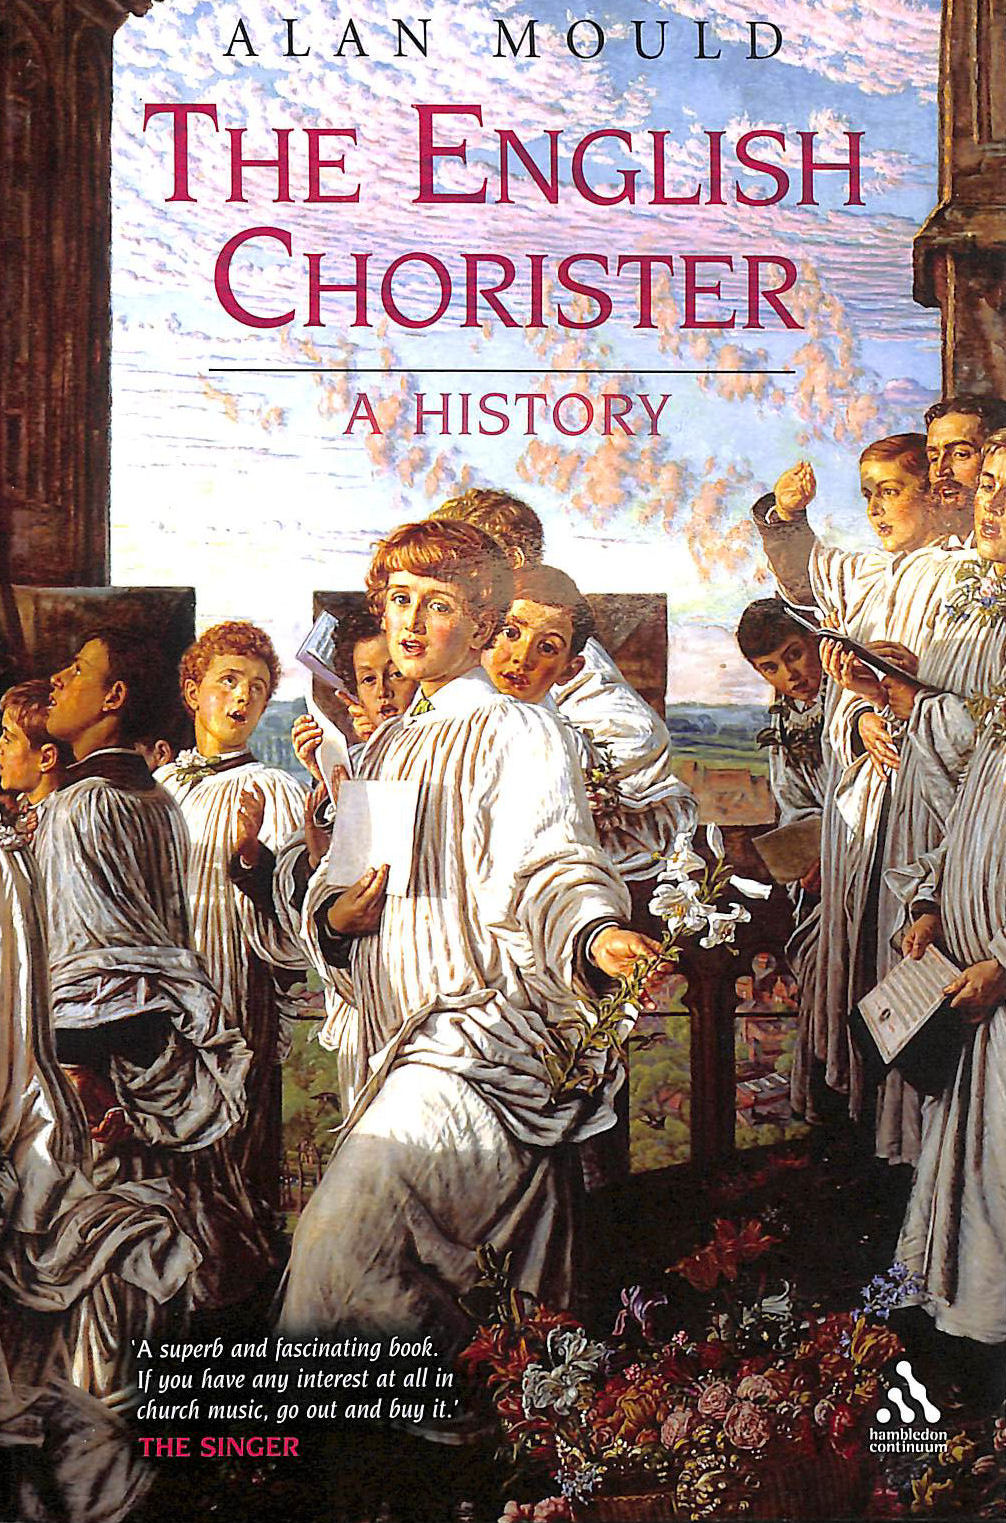 MOULD, ALAN - The English Chorister: A History (Hambledon Continuum)